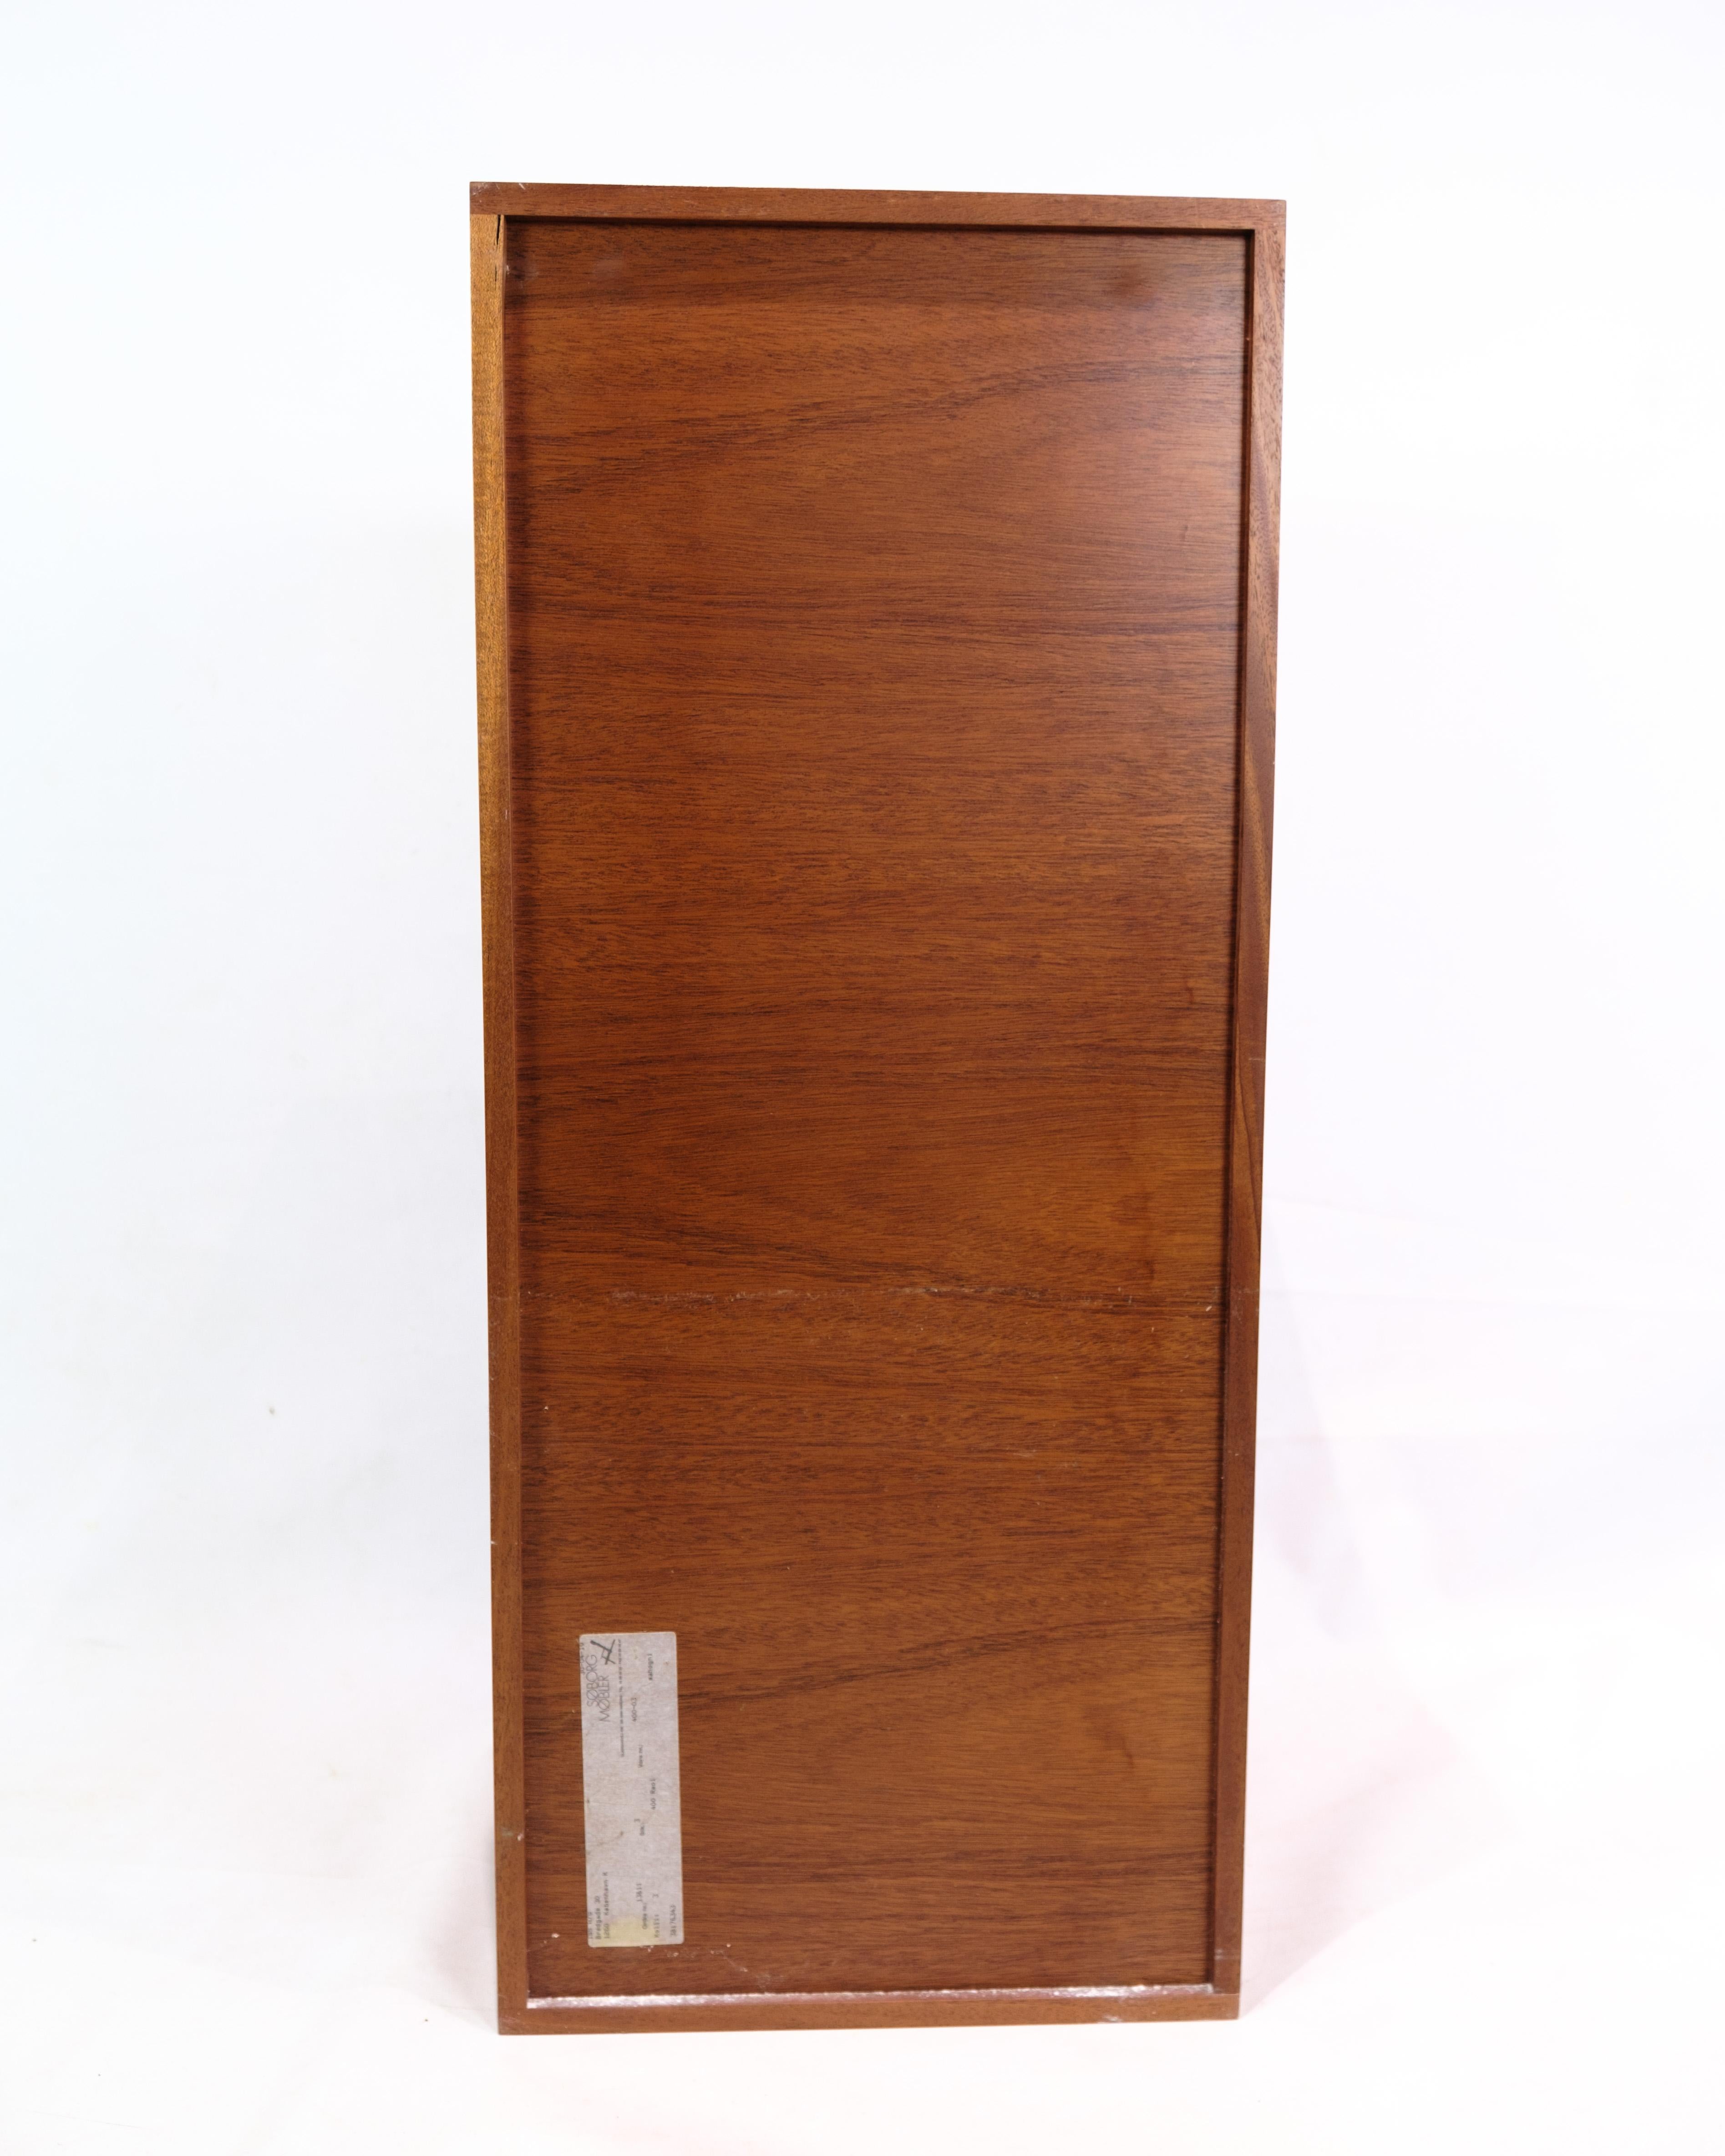 Bookcase - Shelf - Teak wood - Danish design - Tap collections - 1960 For Sale 4